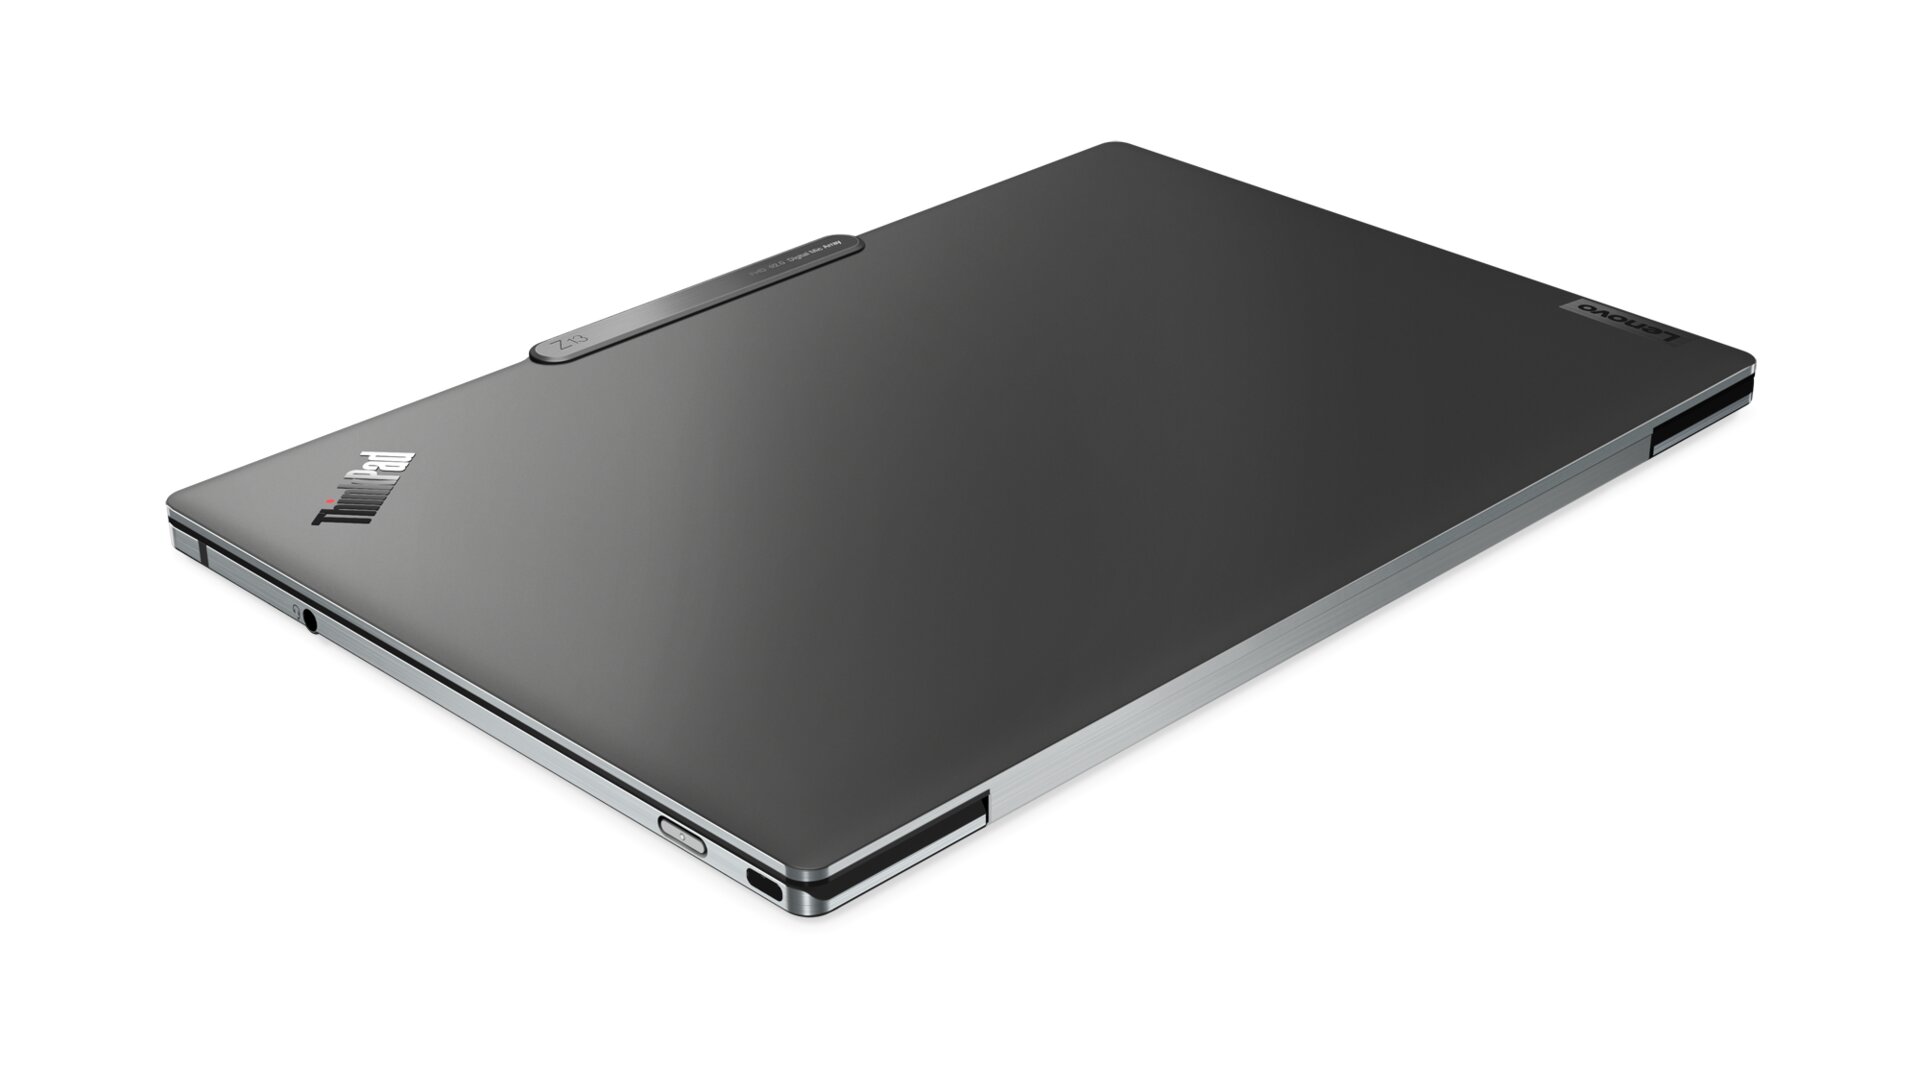 ThinkPad Z13 (Black)